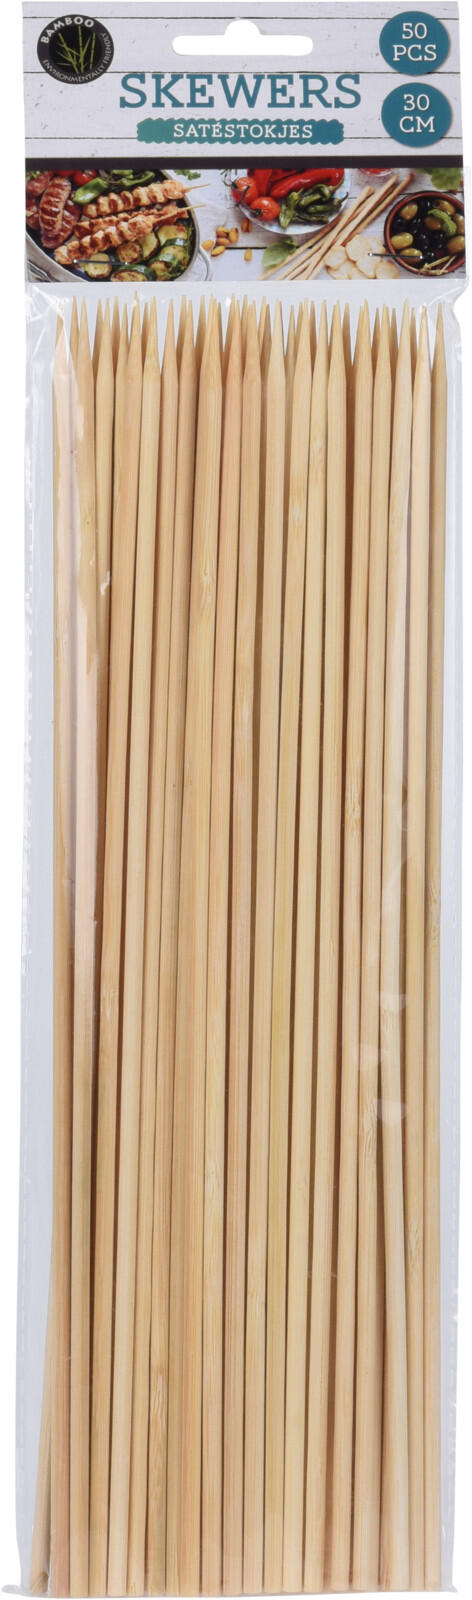 špejle bambus 30cmx4mm (50ks)